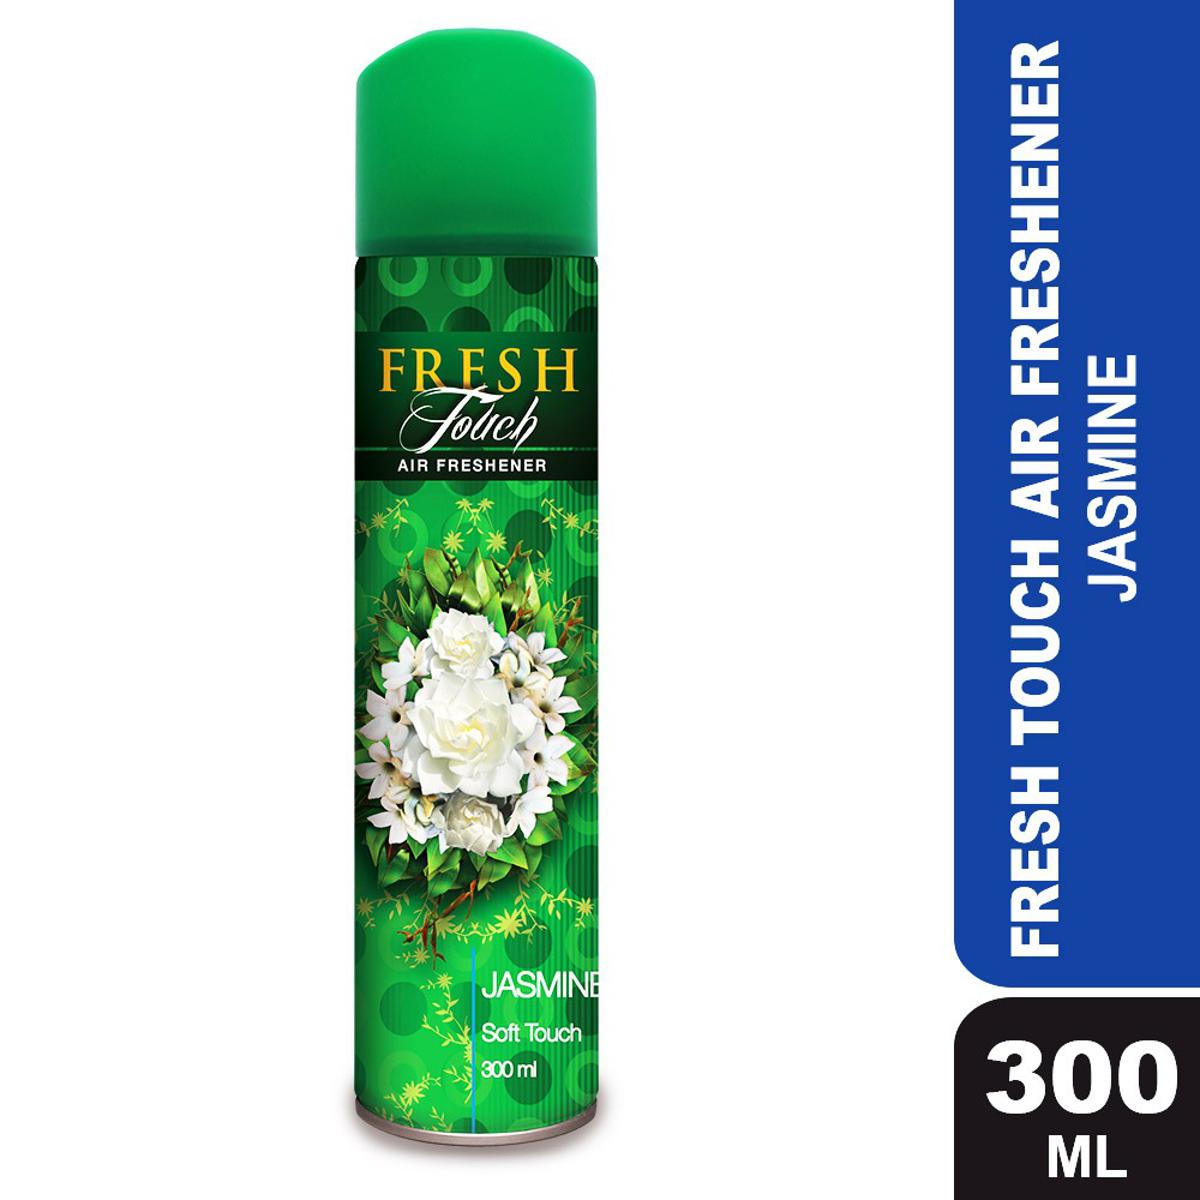 Fresh Touch Air Freshener Jasmine - 300 ML